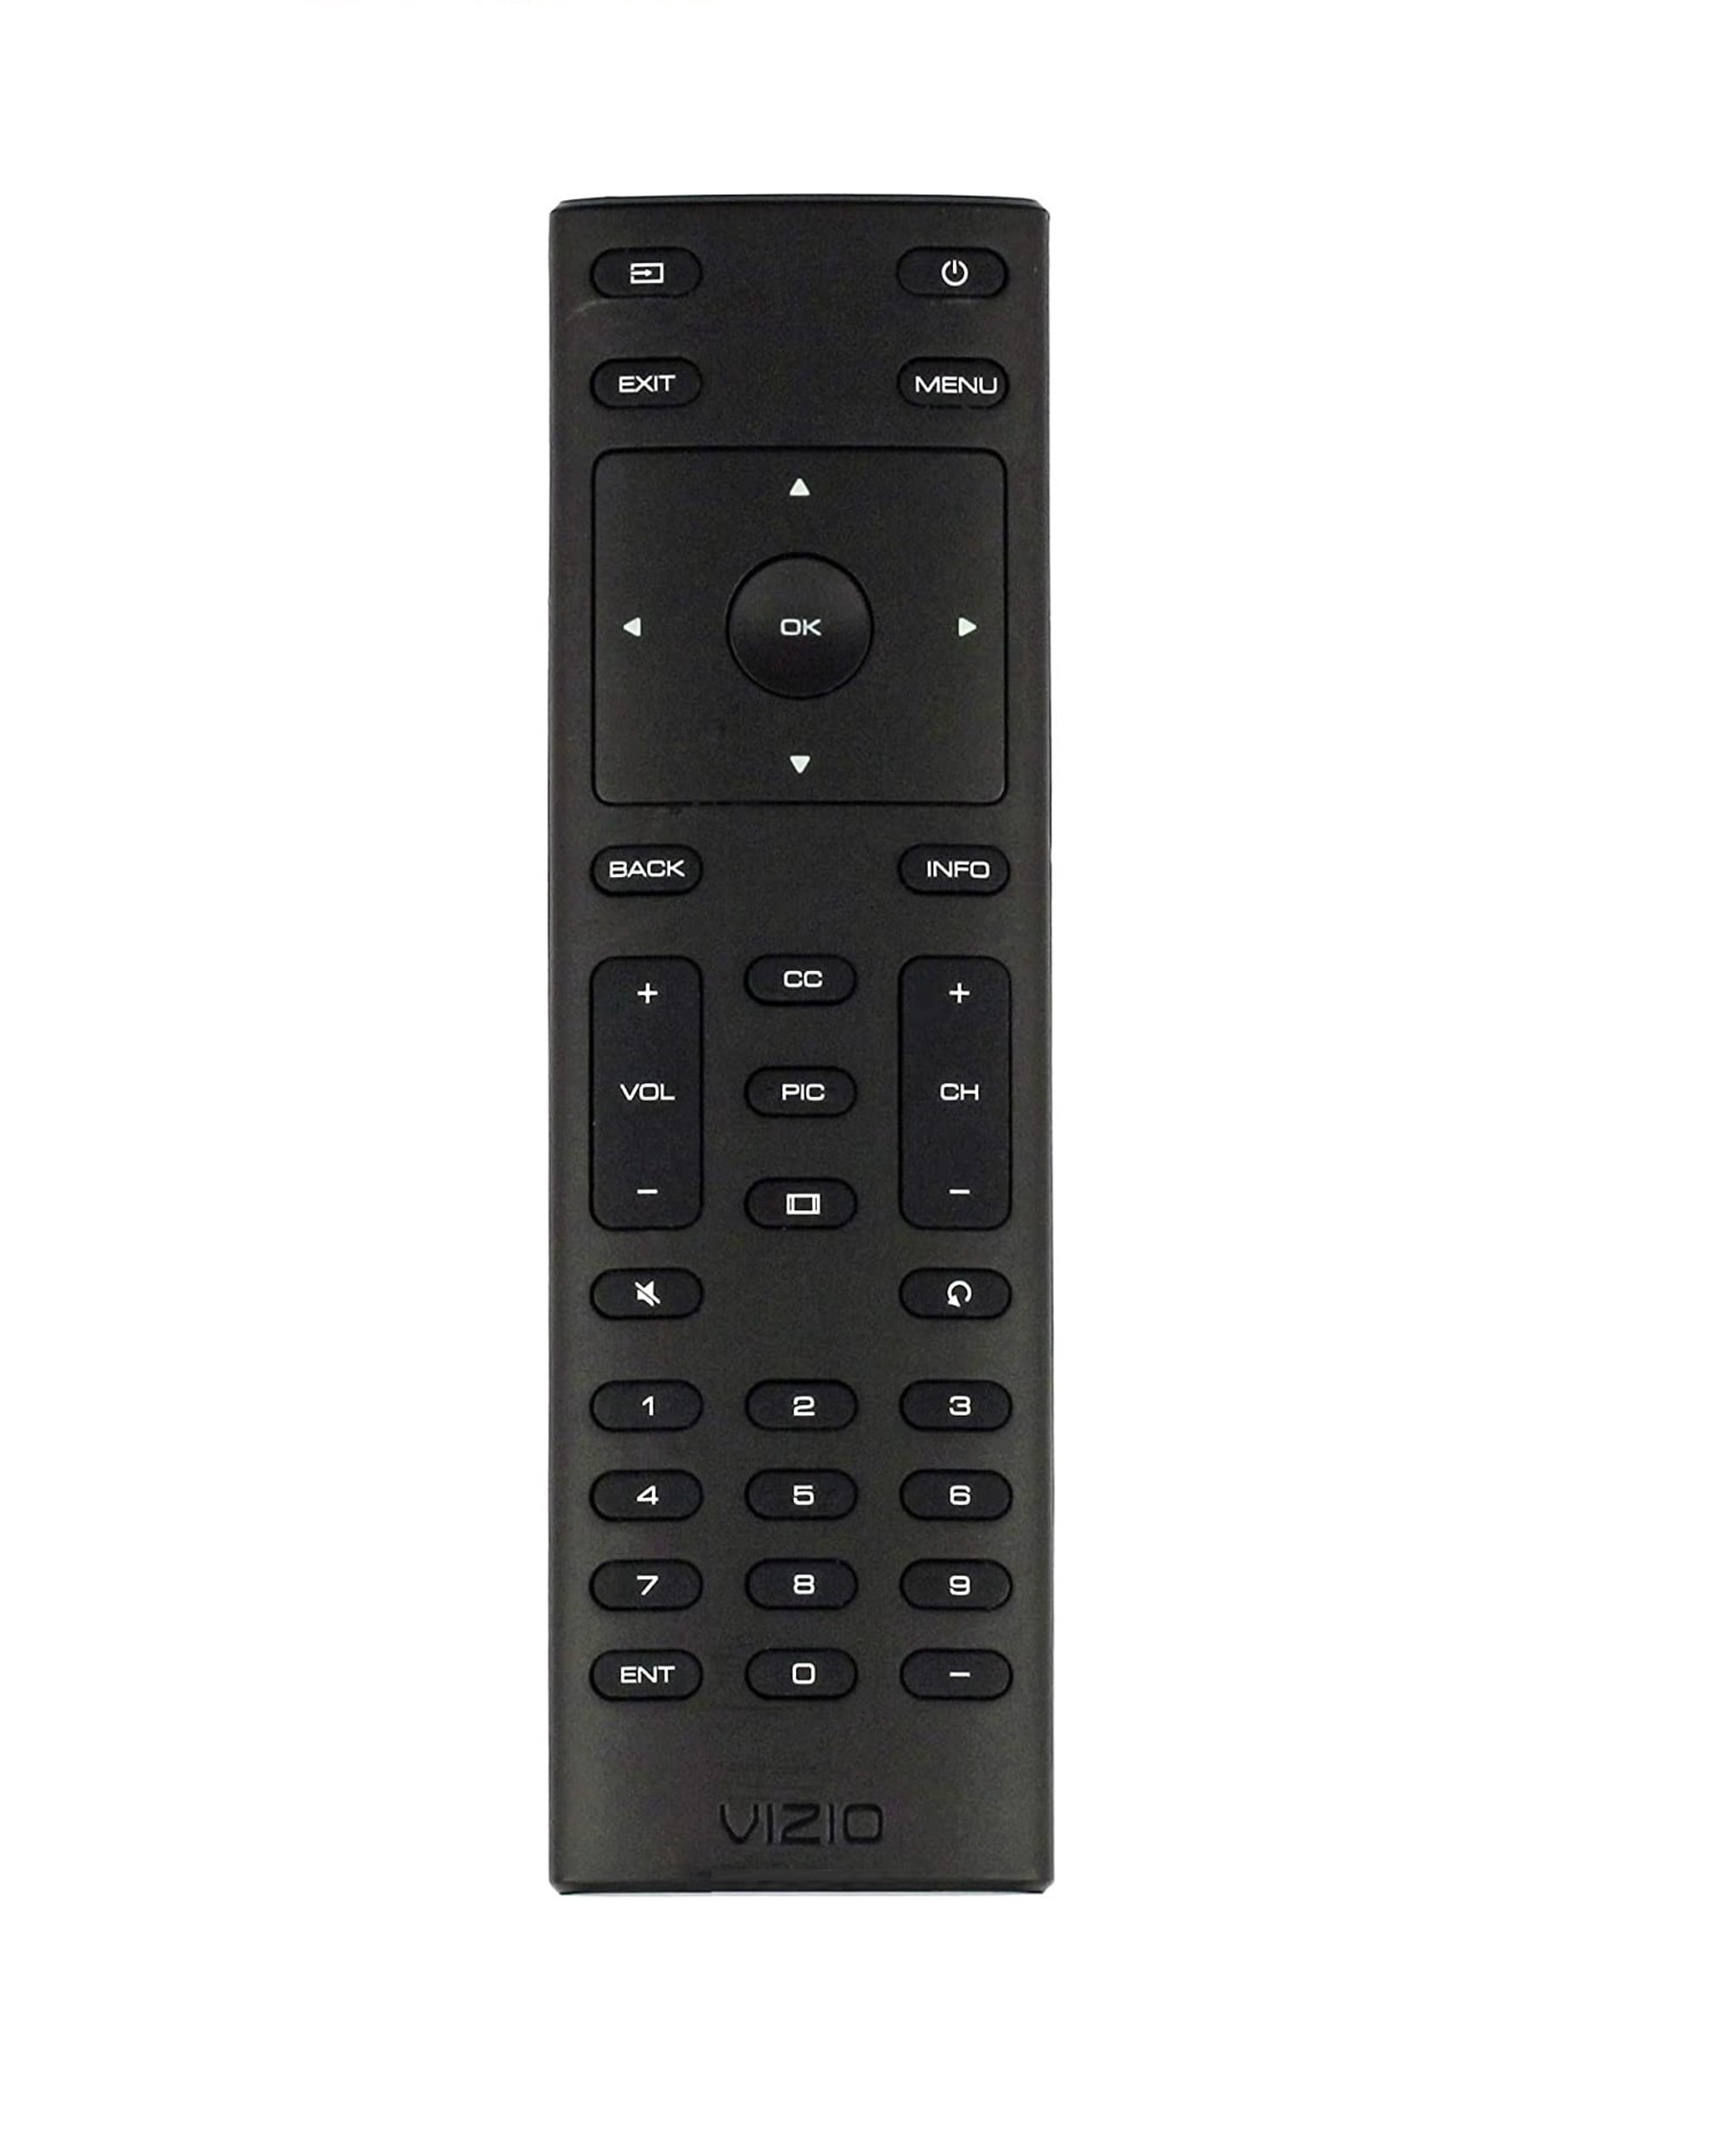 ORIGINAL VIZIO UNIVERSAL HDTV REMOTE CONTROL FOR D32HN-D1 D32HN-E0 D32HN-E1 